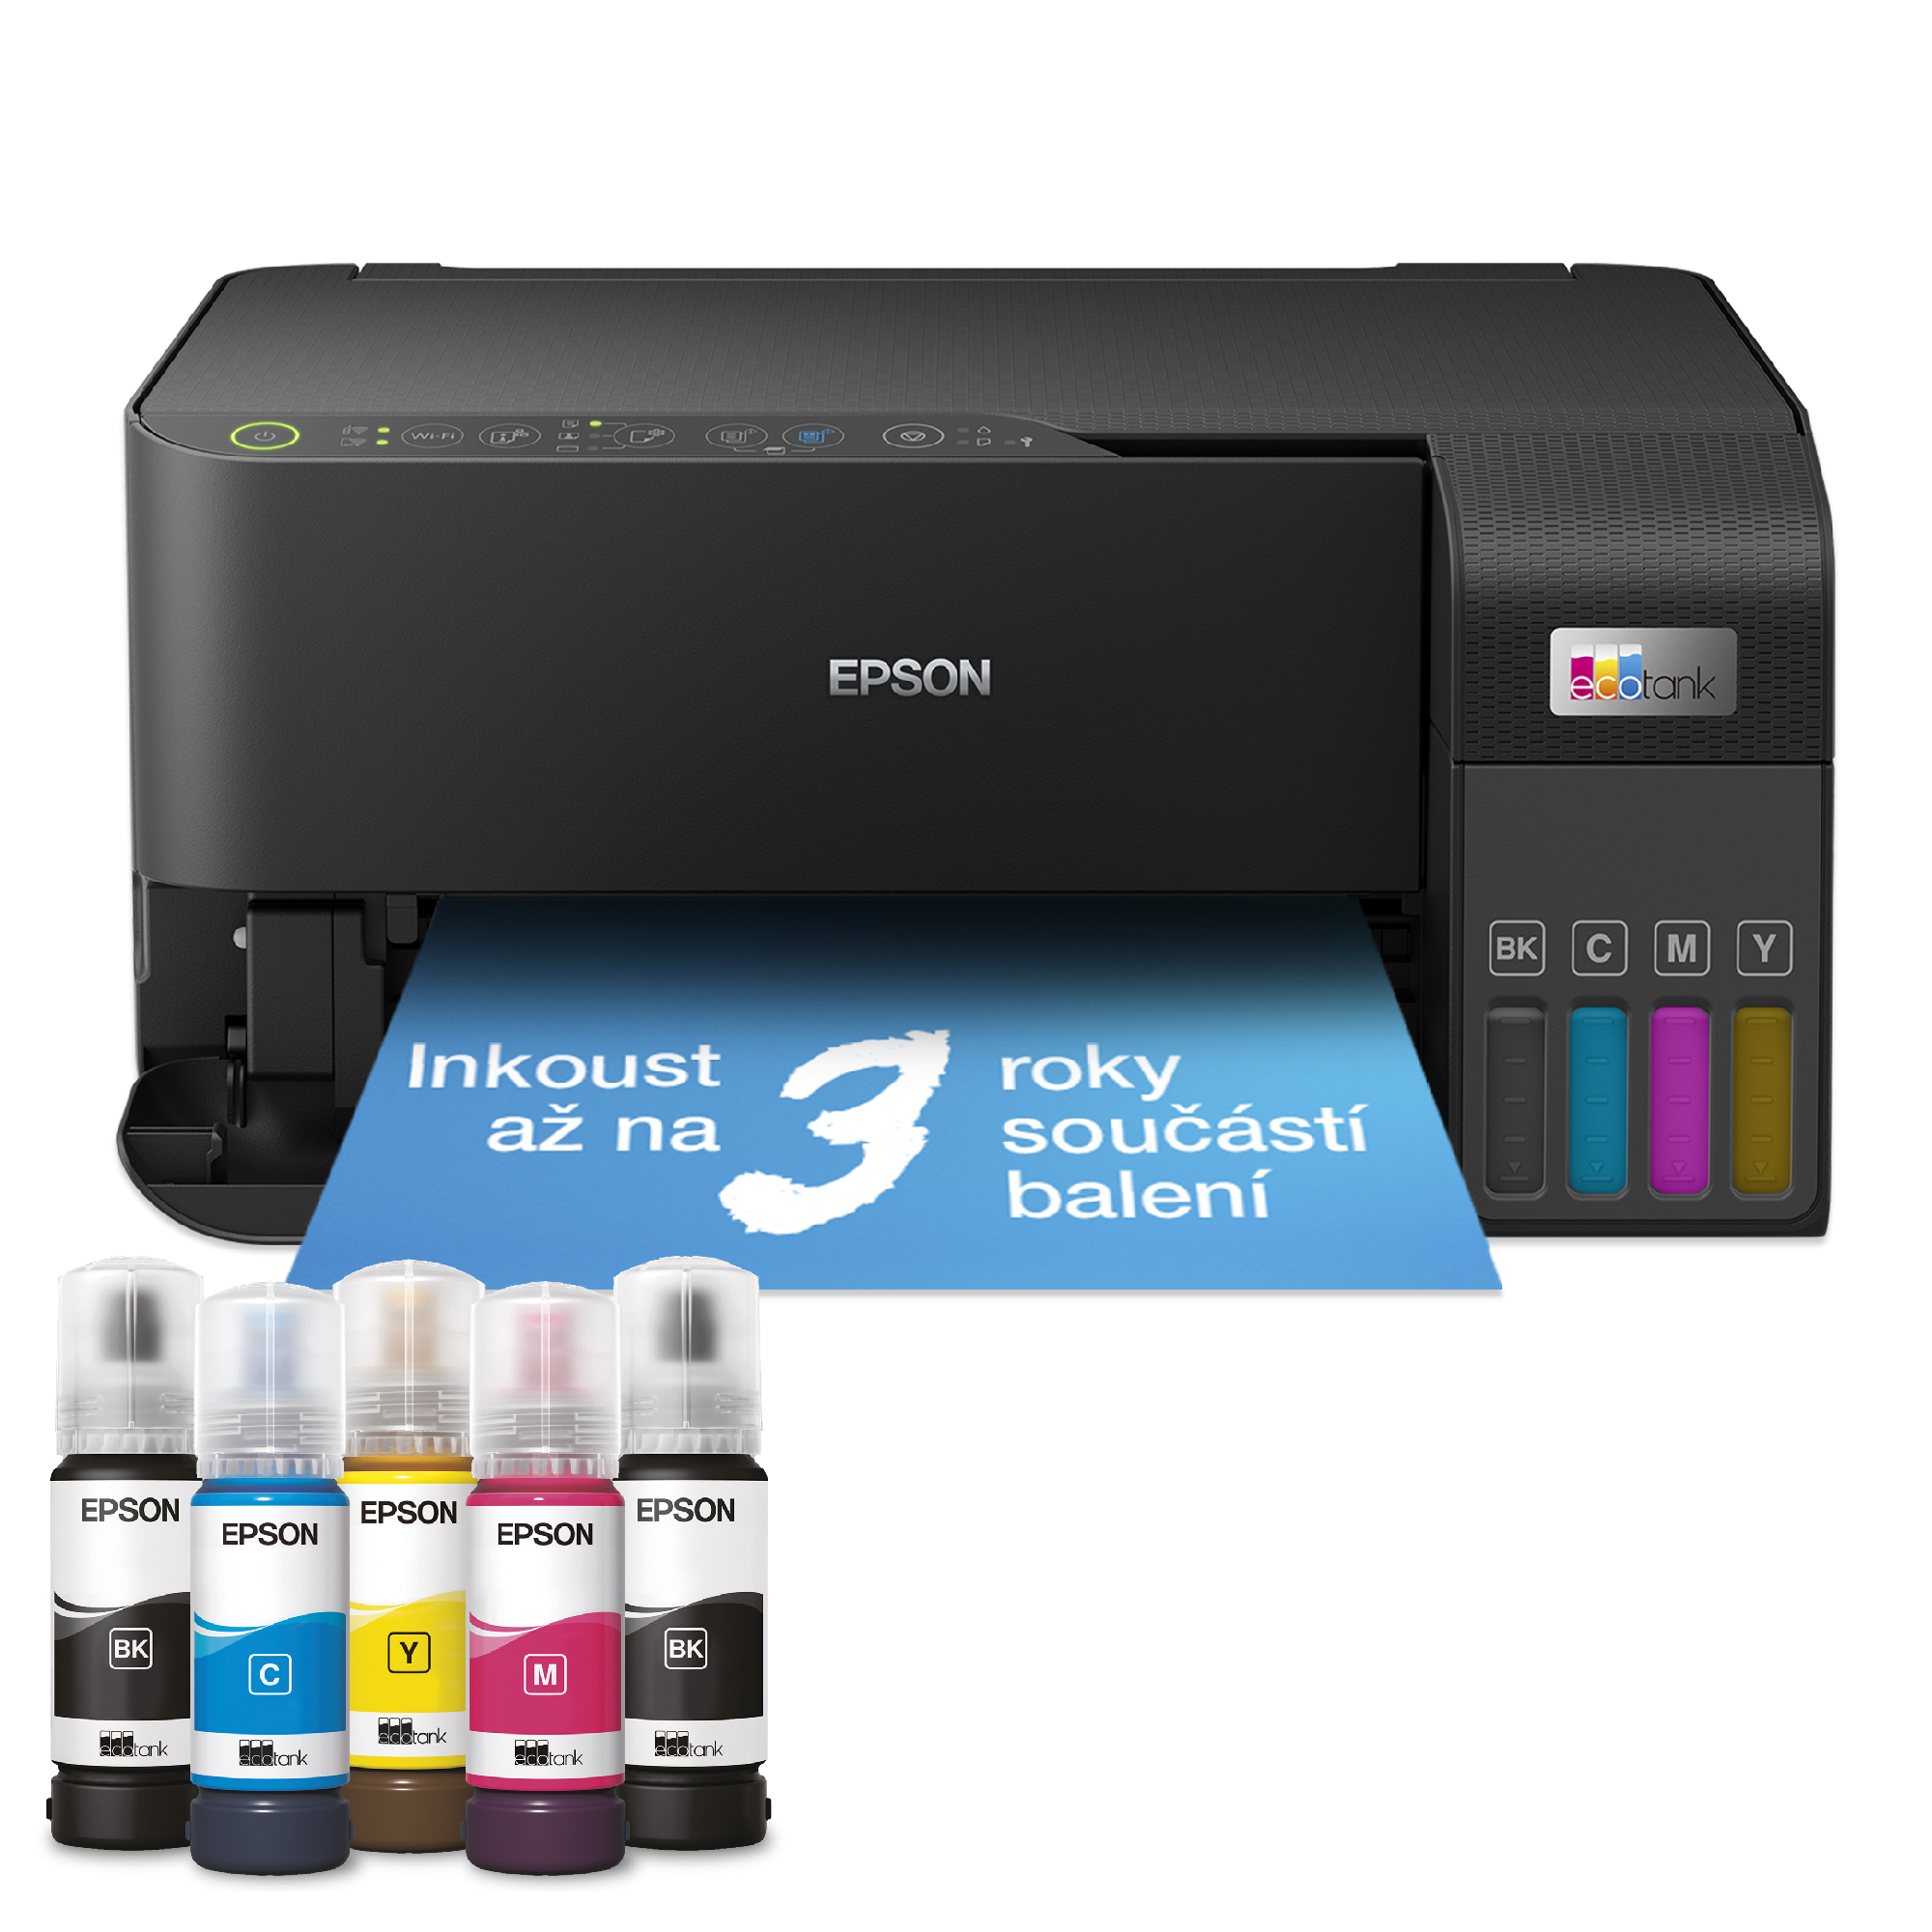 Epson EcoTank/ L3550/ MF/ Ink/ A4/ WiFi/ USB0 